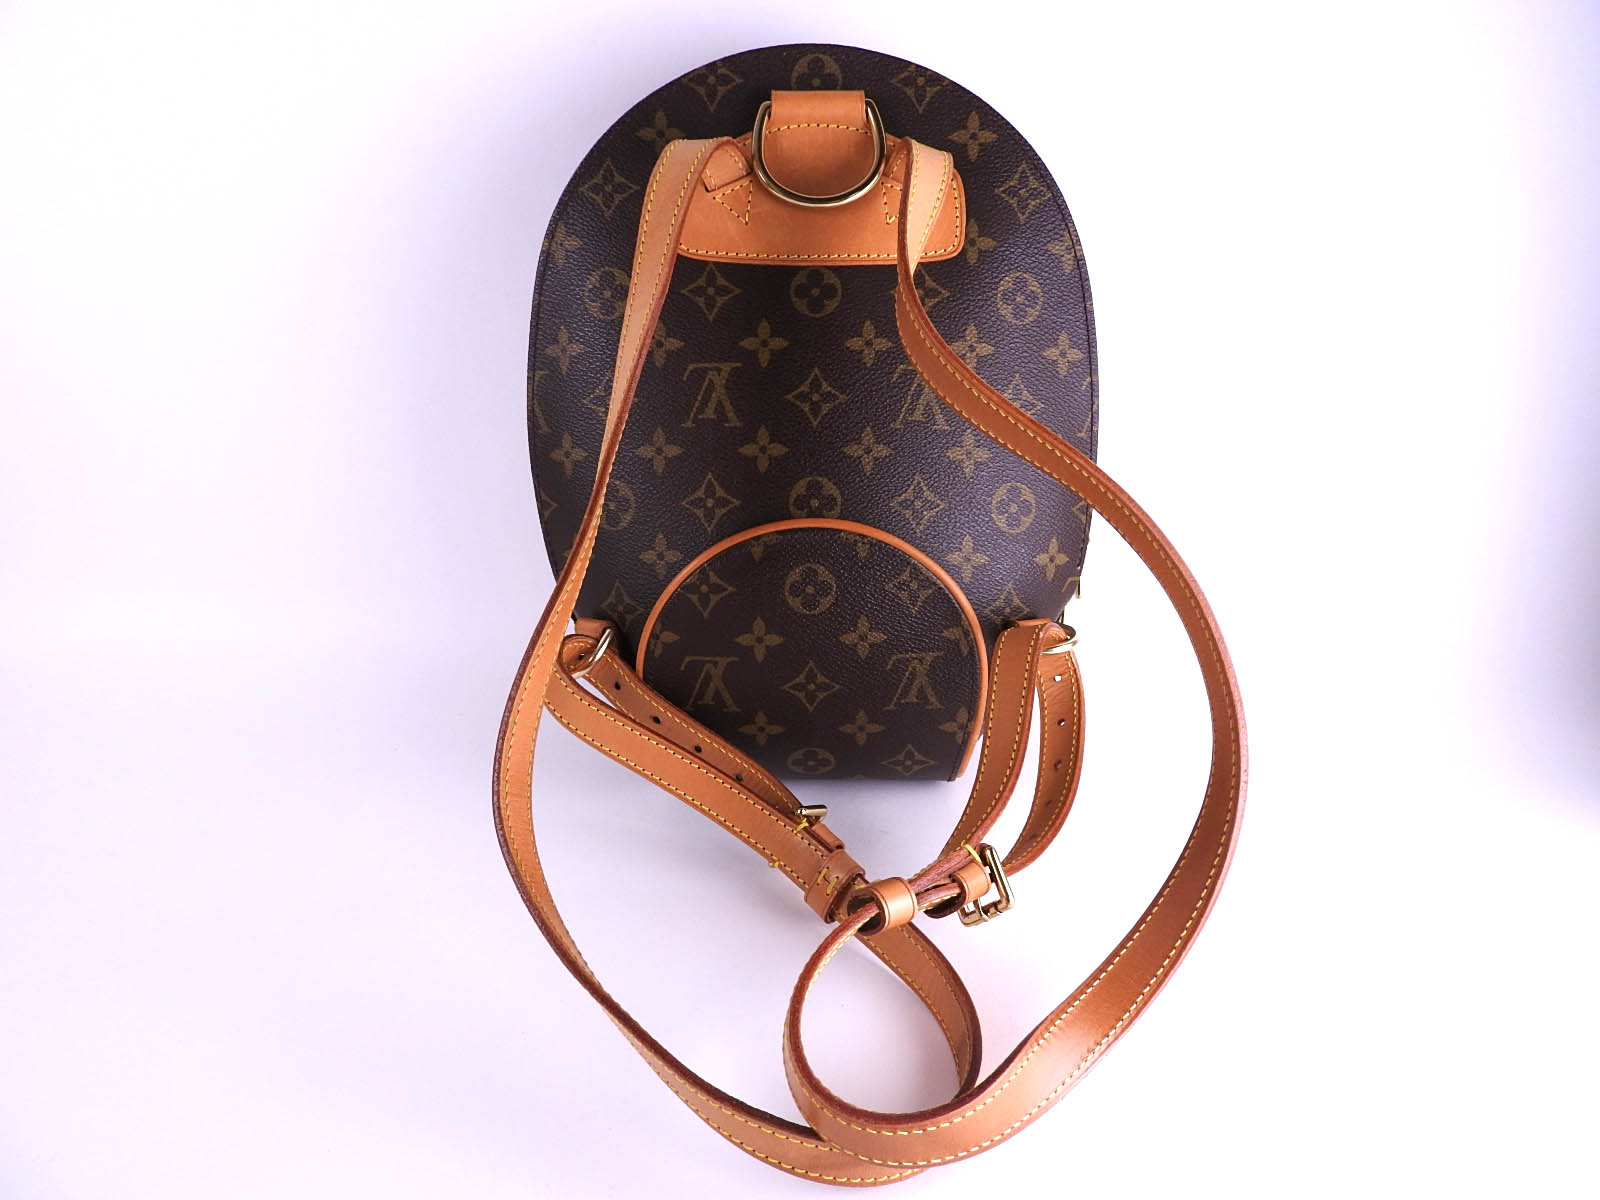 Please Authenticate this Louis Vuitton Ellipse backpack